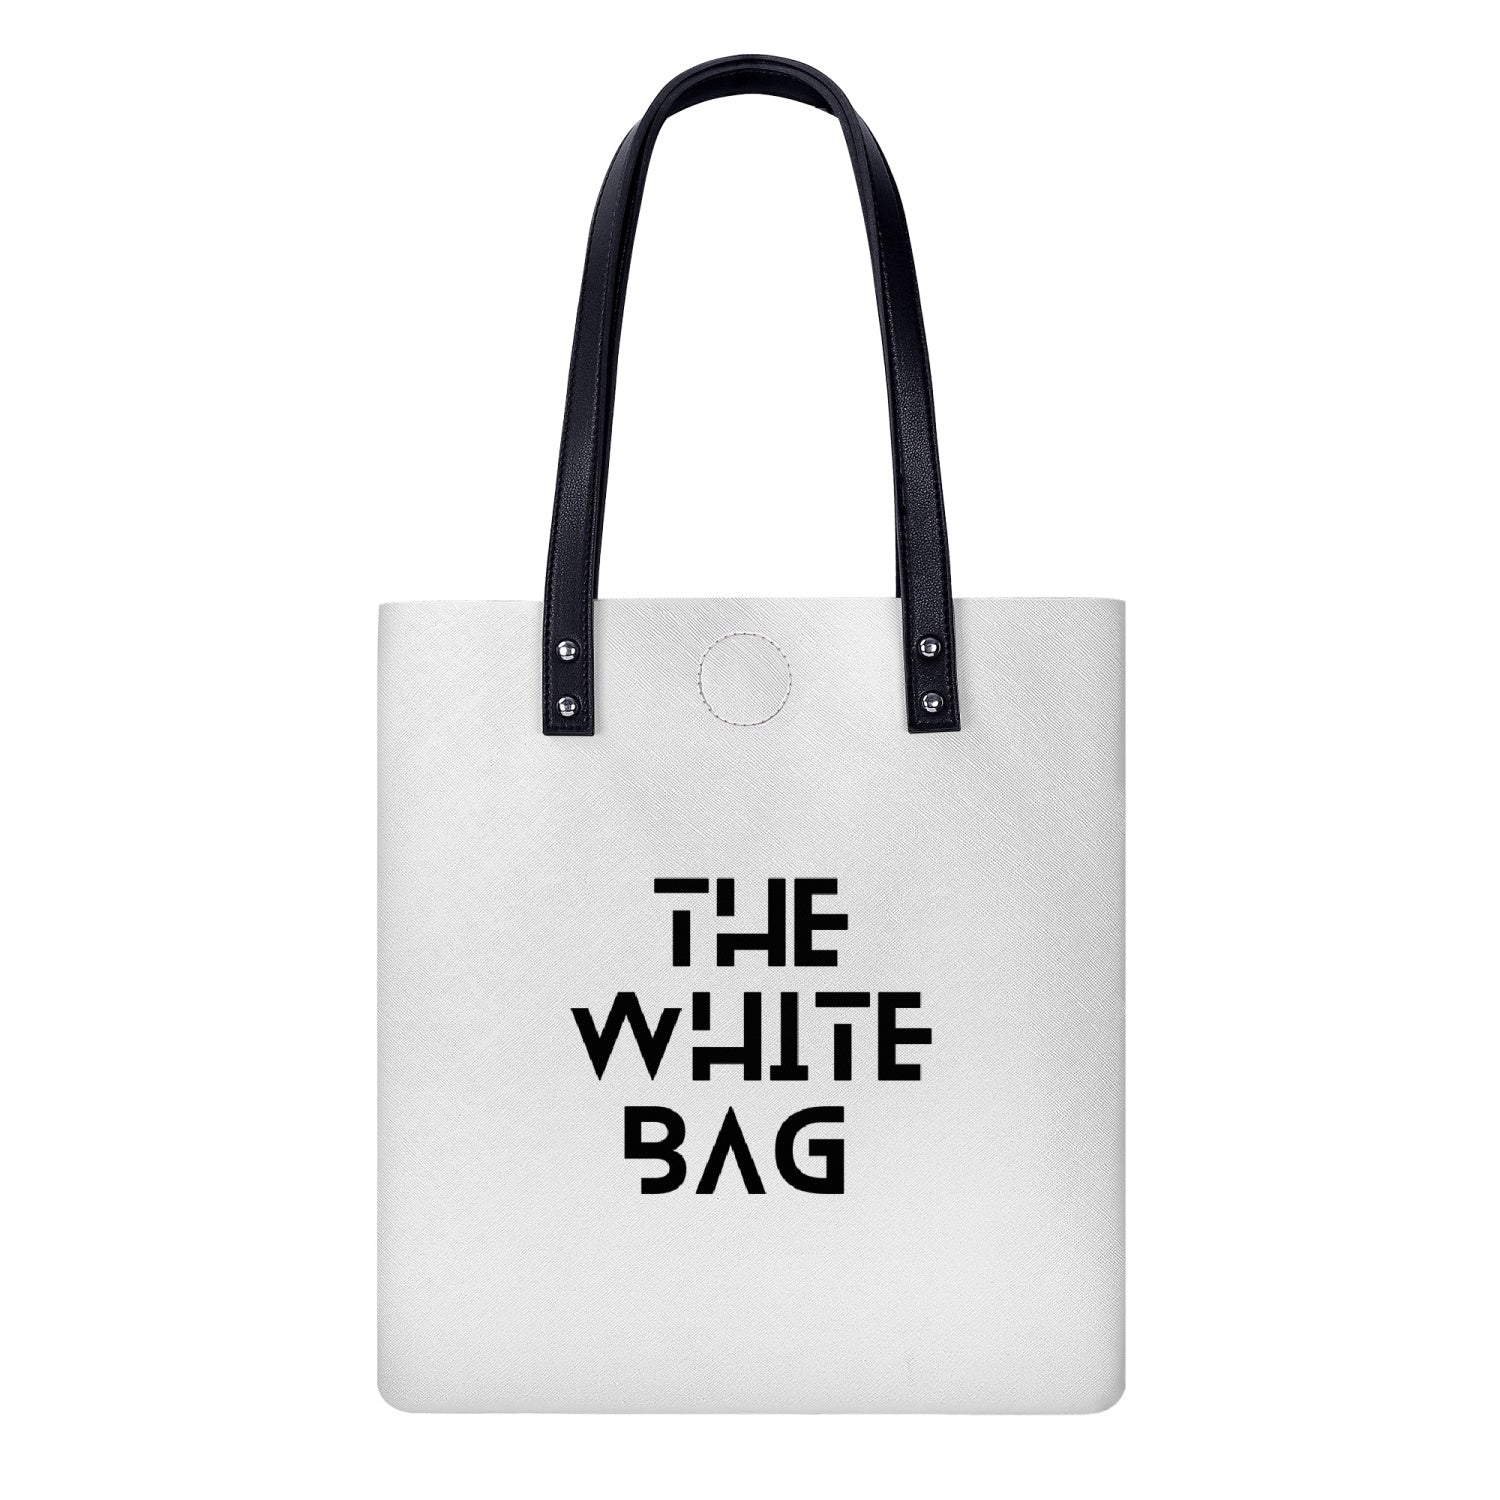 The White Vegan Tote Bag.